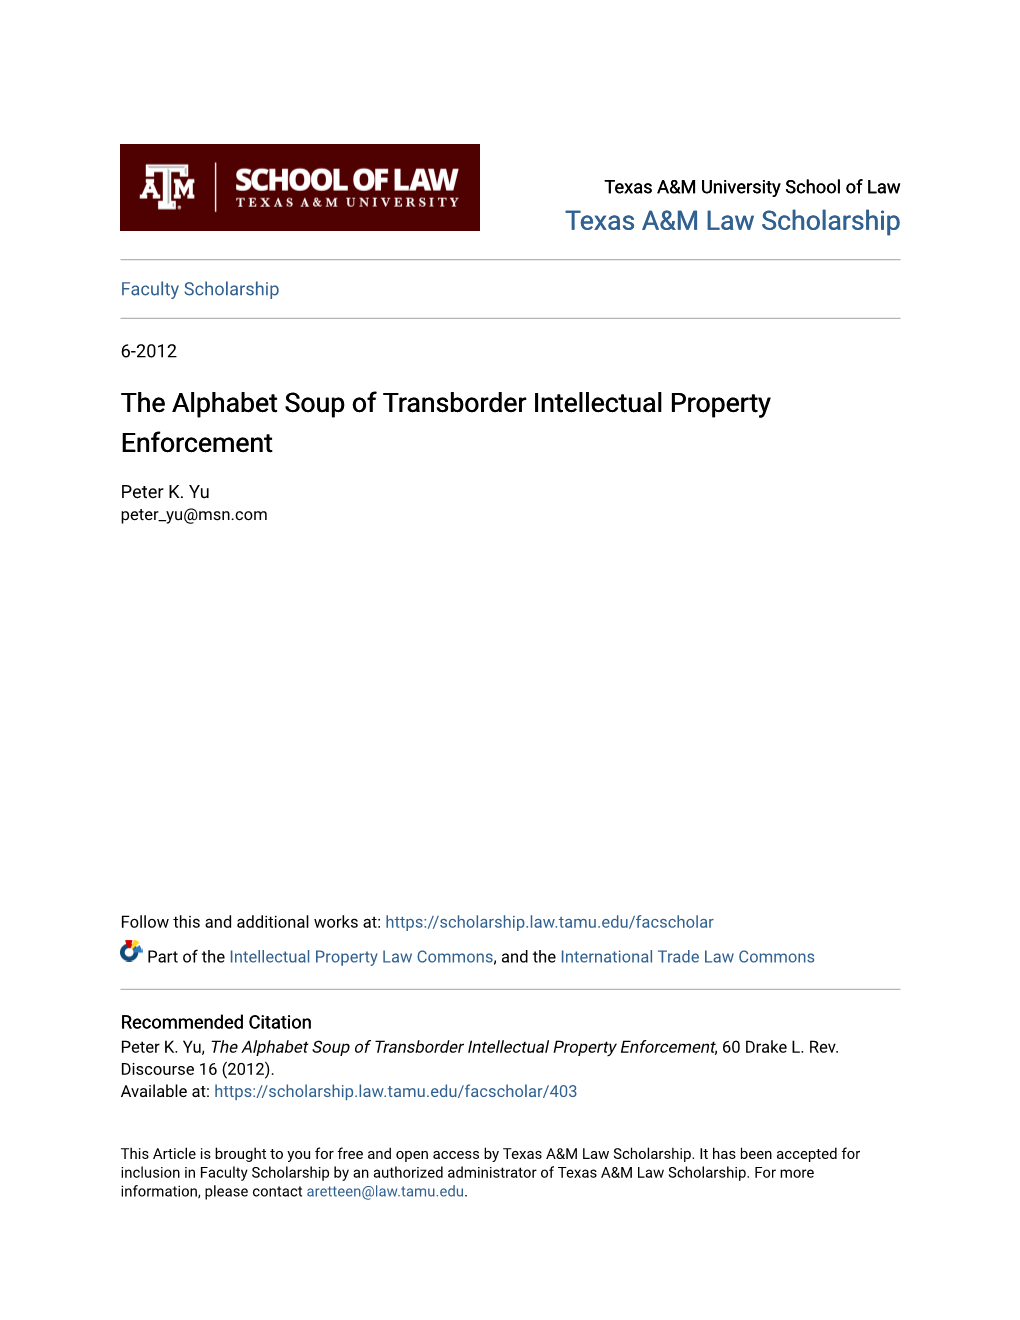 The Alphabet Soup of Transborder Intellectual Property Enforcement